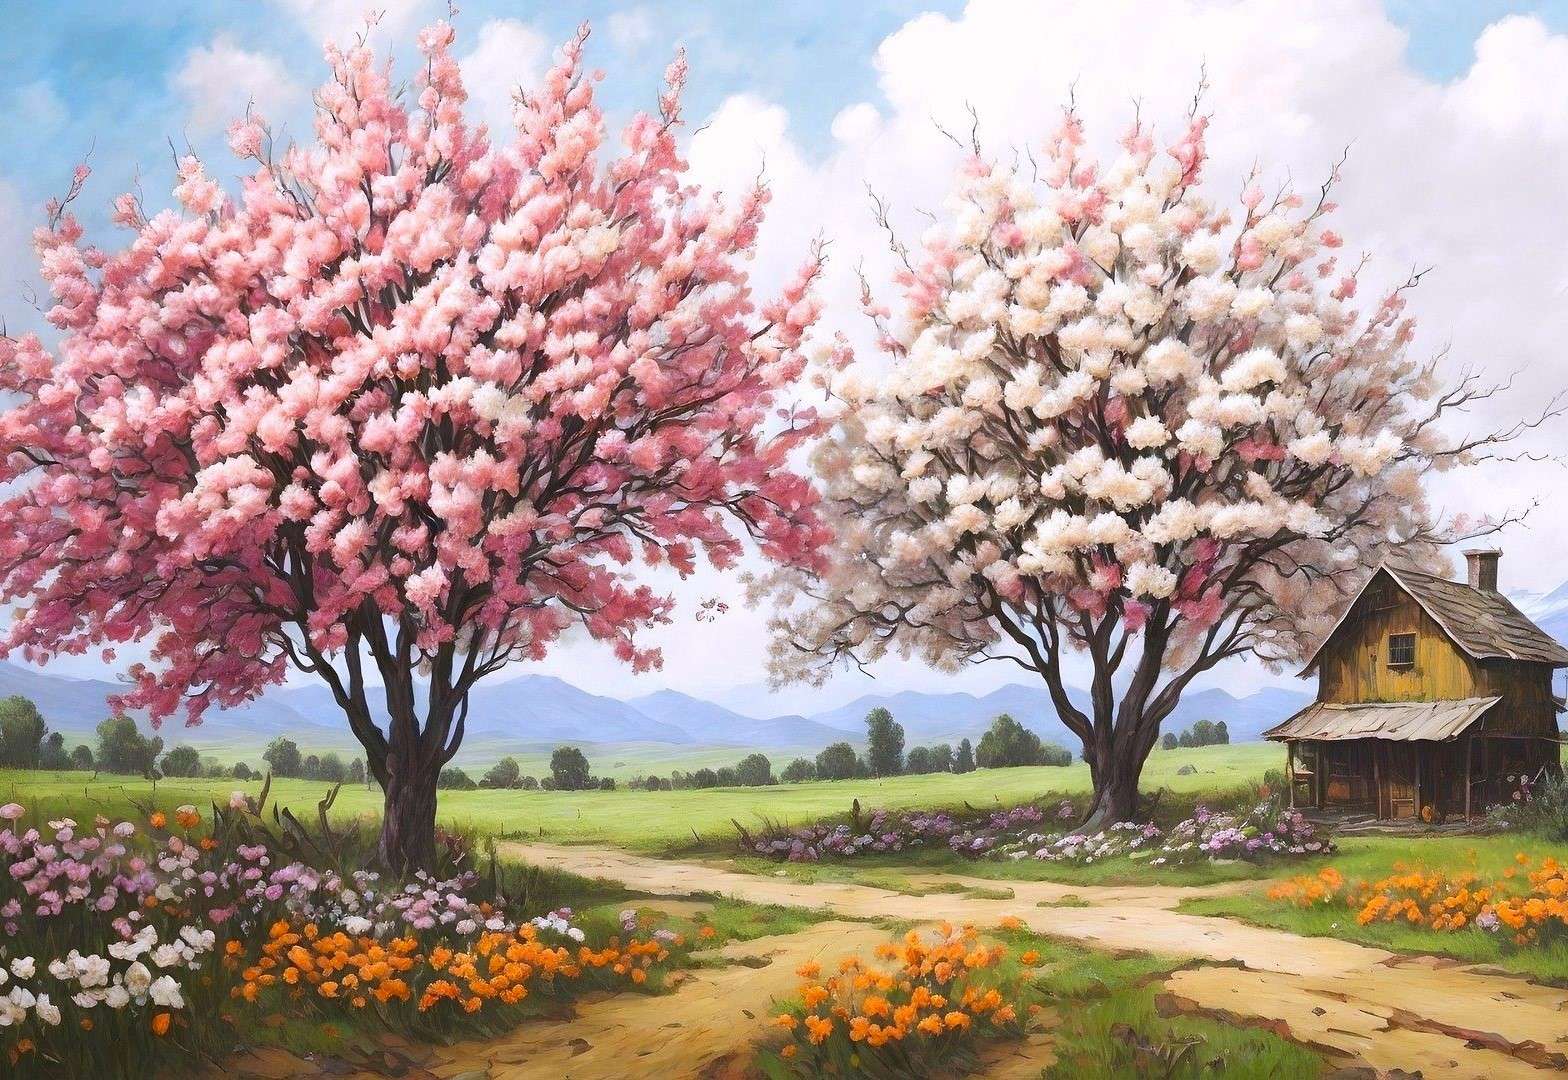 Virágzó fák (vidéki táj) online puzzle